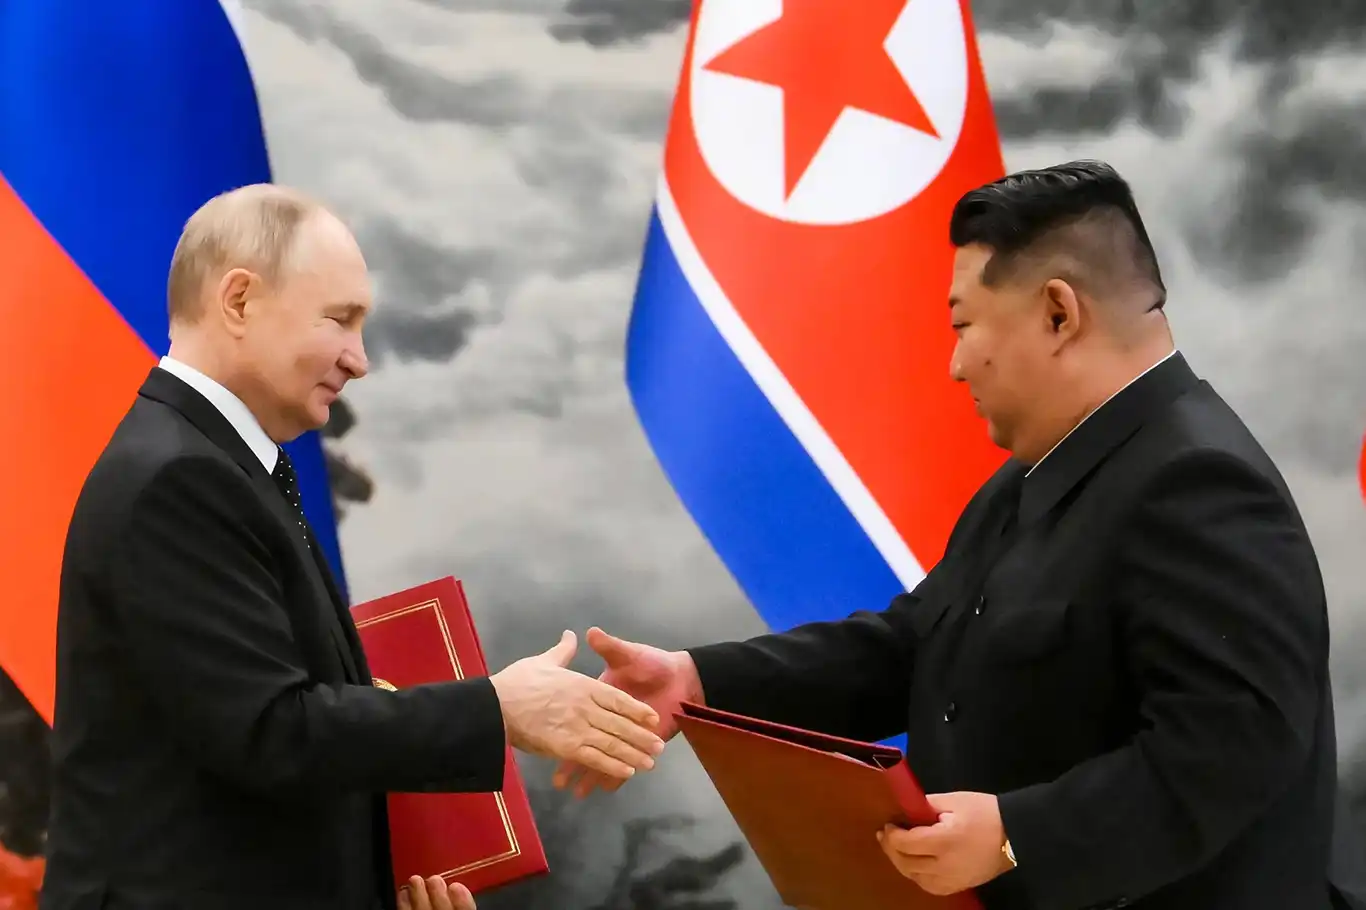 Russia and North Korea sign landmark treaty in Pyongyang summit